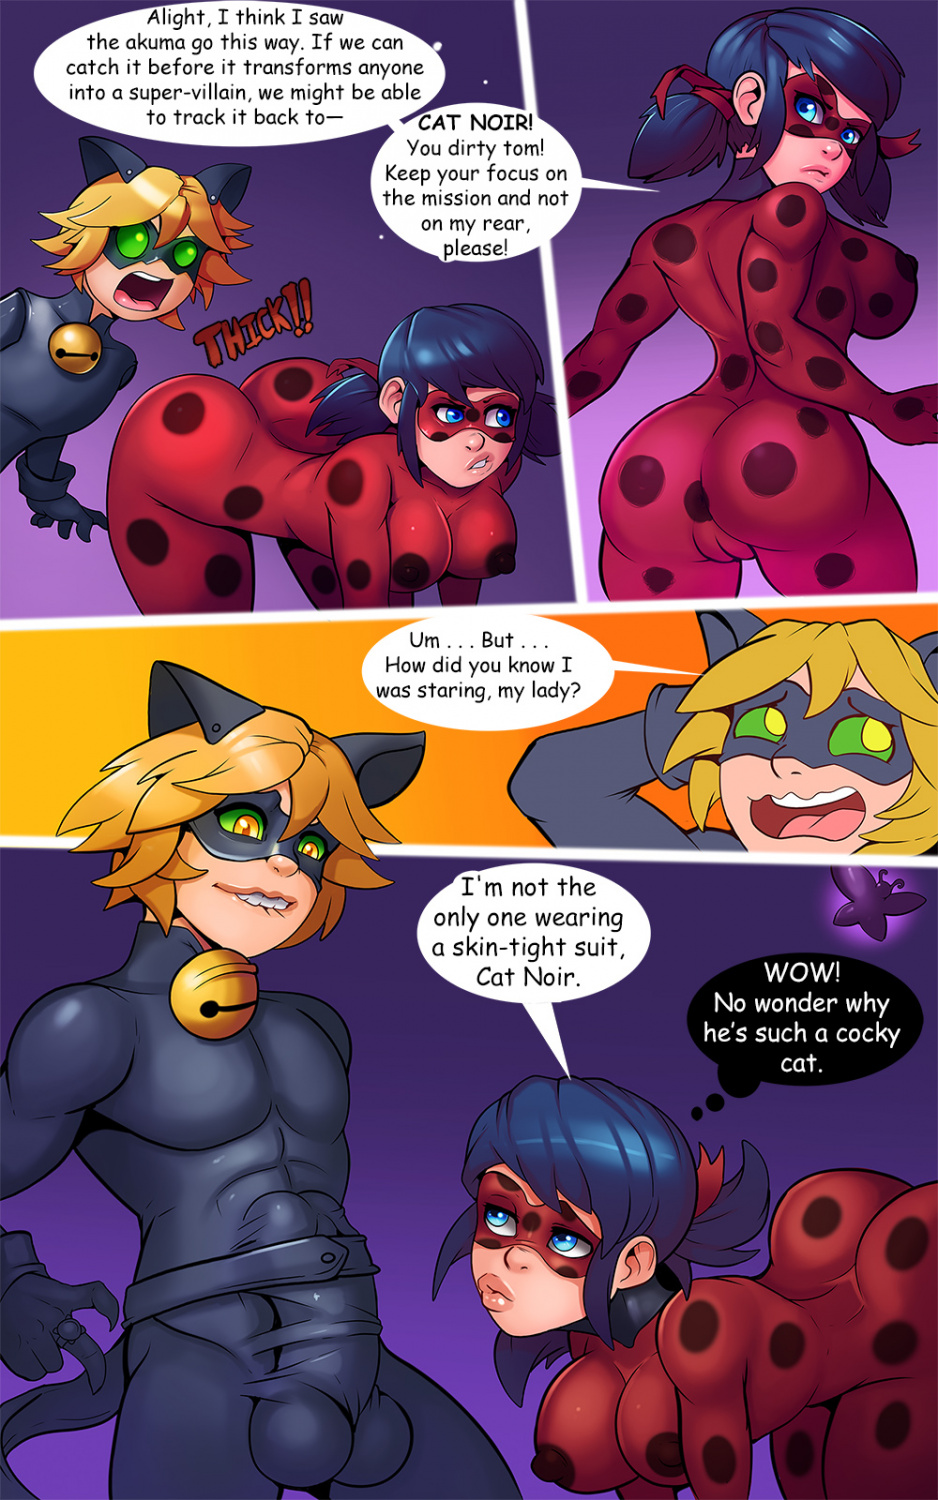 Nude Sex Ladybug - Ladybug versus The Cougar - Multporn Comics & Hentai manga